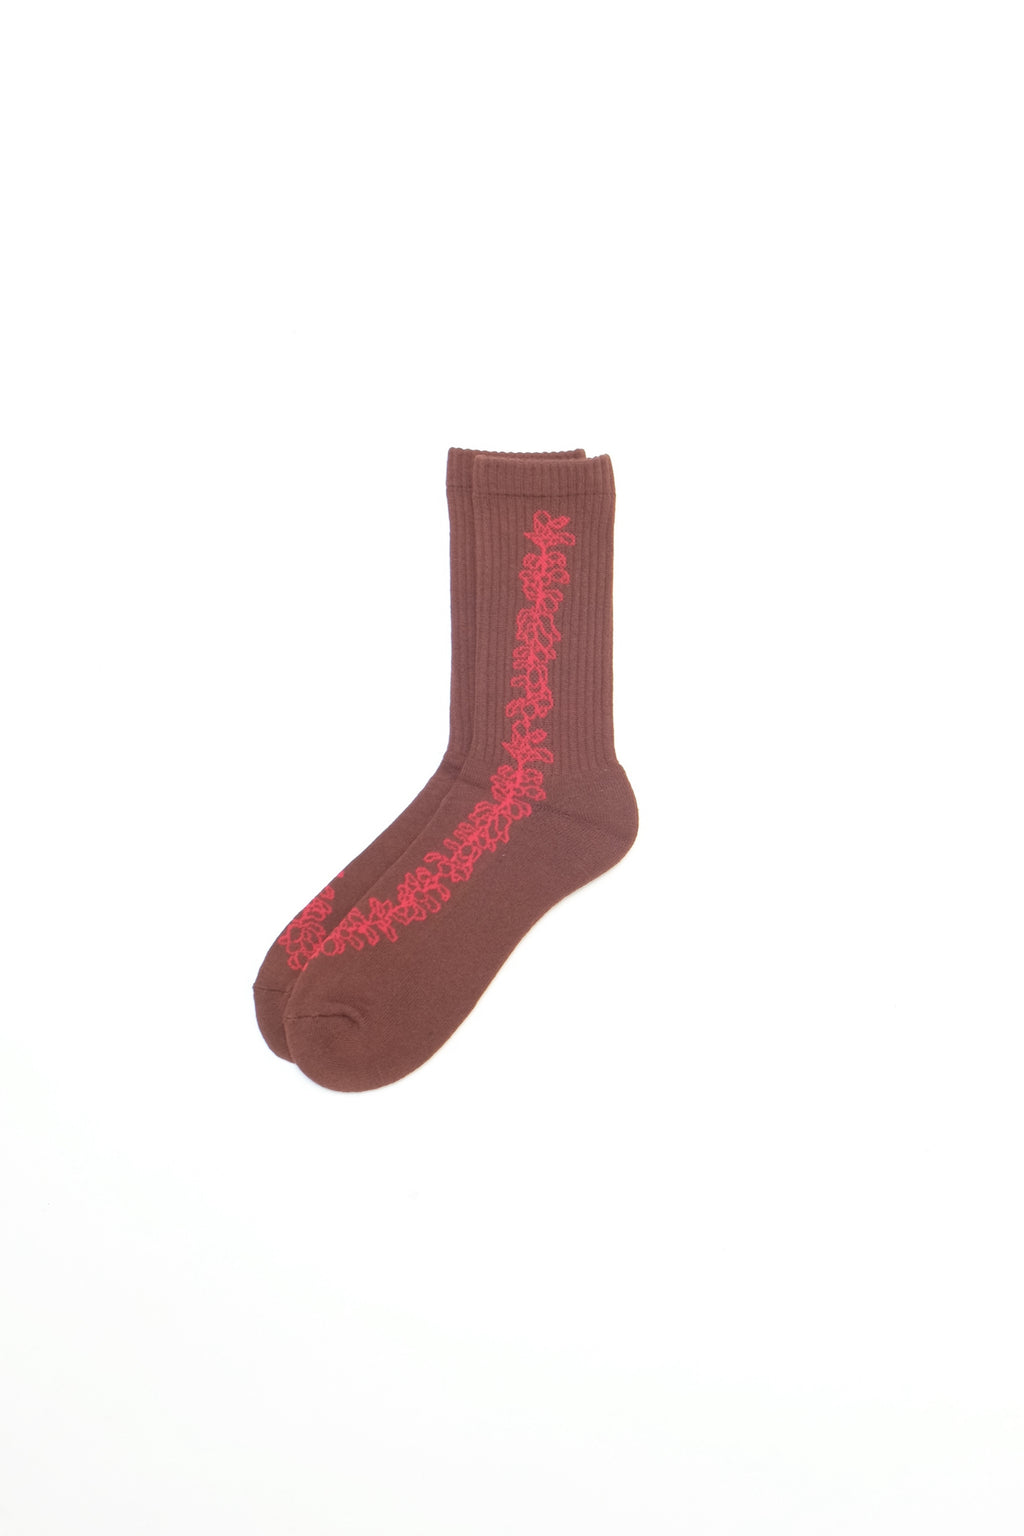 Socks - Pua - Brown/Red